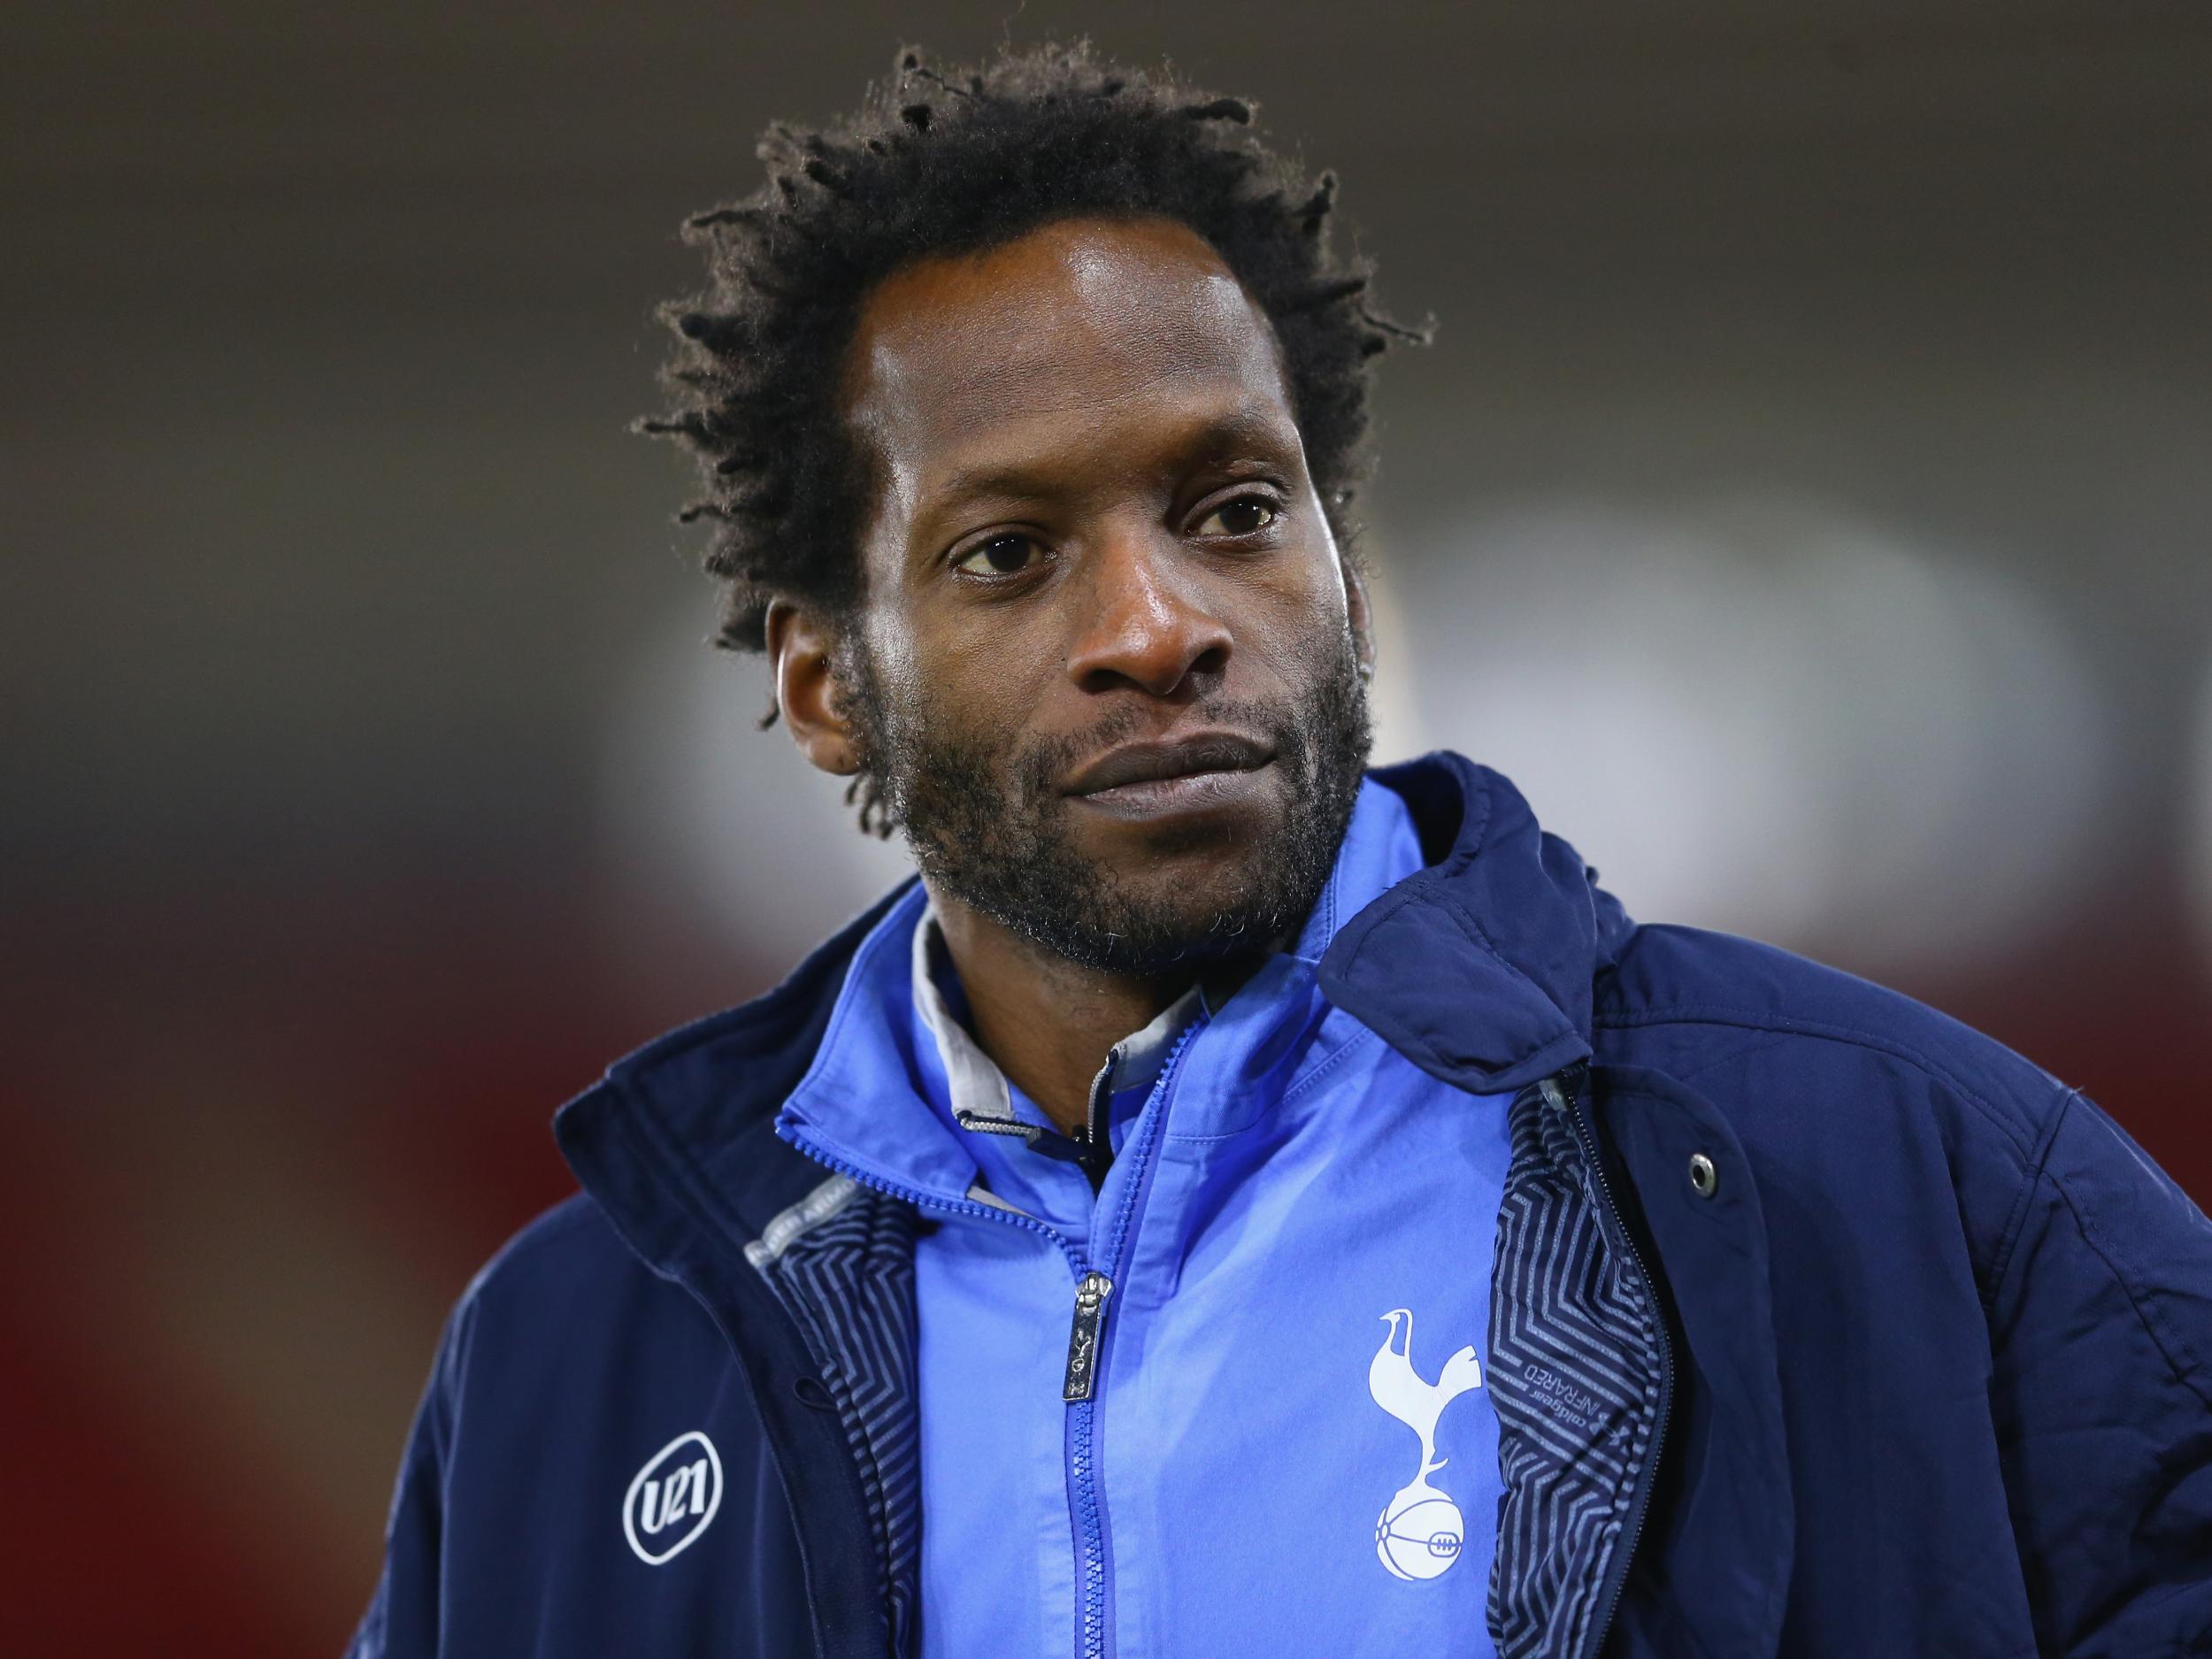 Ehiogu was U23 coach at Tottenham before his tragic passing